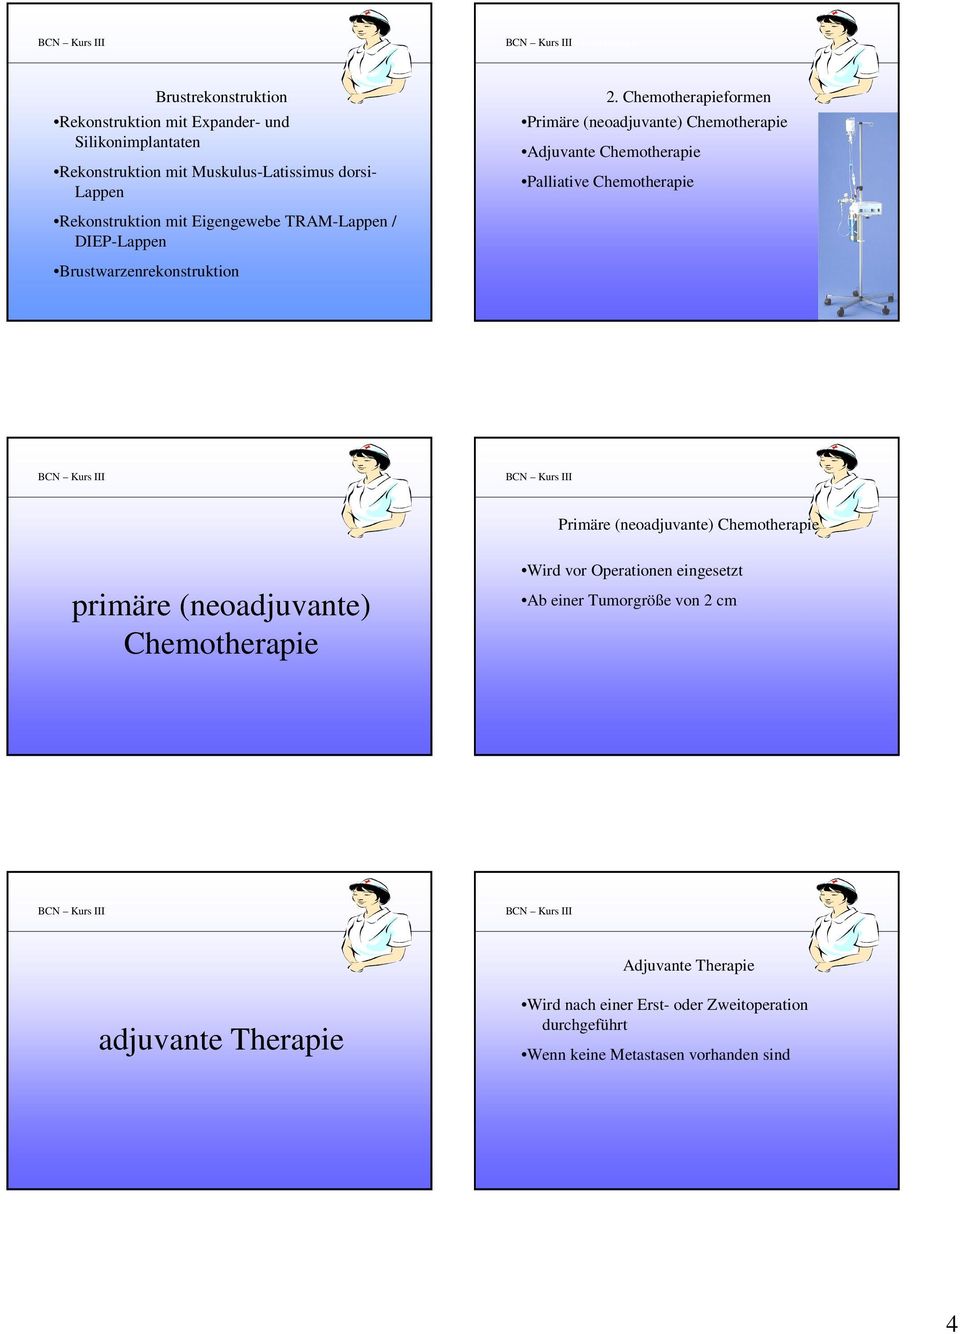 Chemotherapieformen Primäre (neoadjuvante) Chemotherapie Adjuvante Chemotherapie Palliative Chemotherapie Primäre (neoadjuvante) Chemotherapie